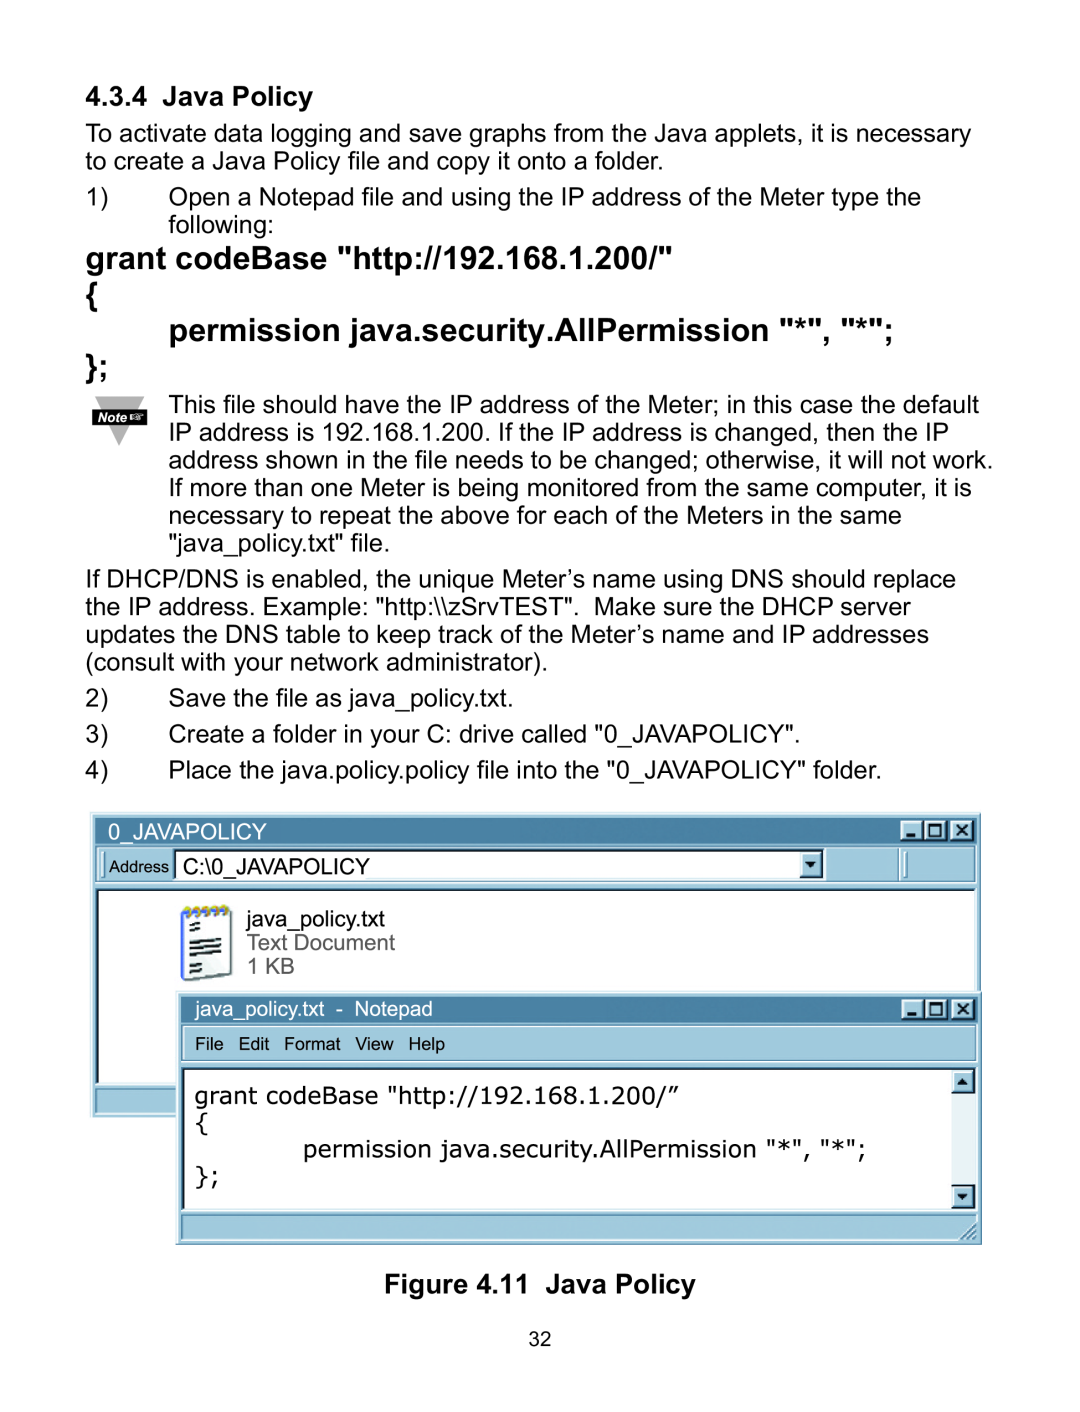 Omega WI8XX-U manual 4.3.4, 11 Java Policy, grant codeBase http//192.168.1.200, permission java.security.AllPermission 